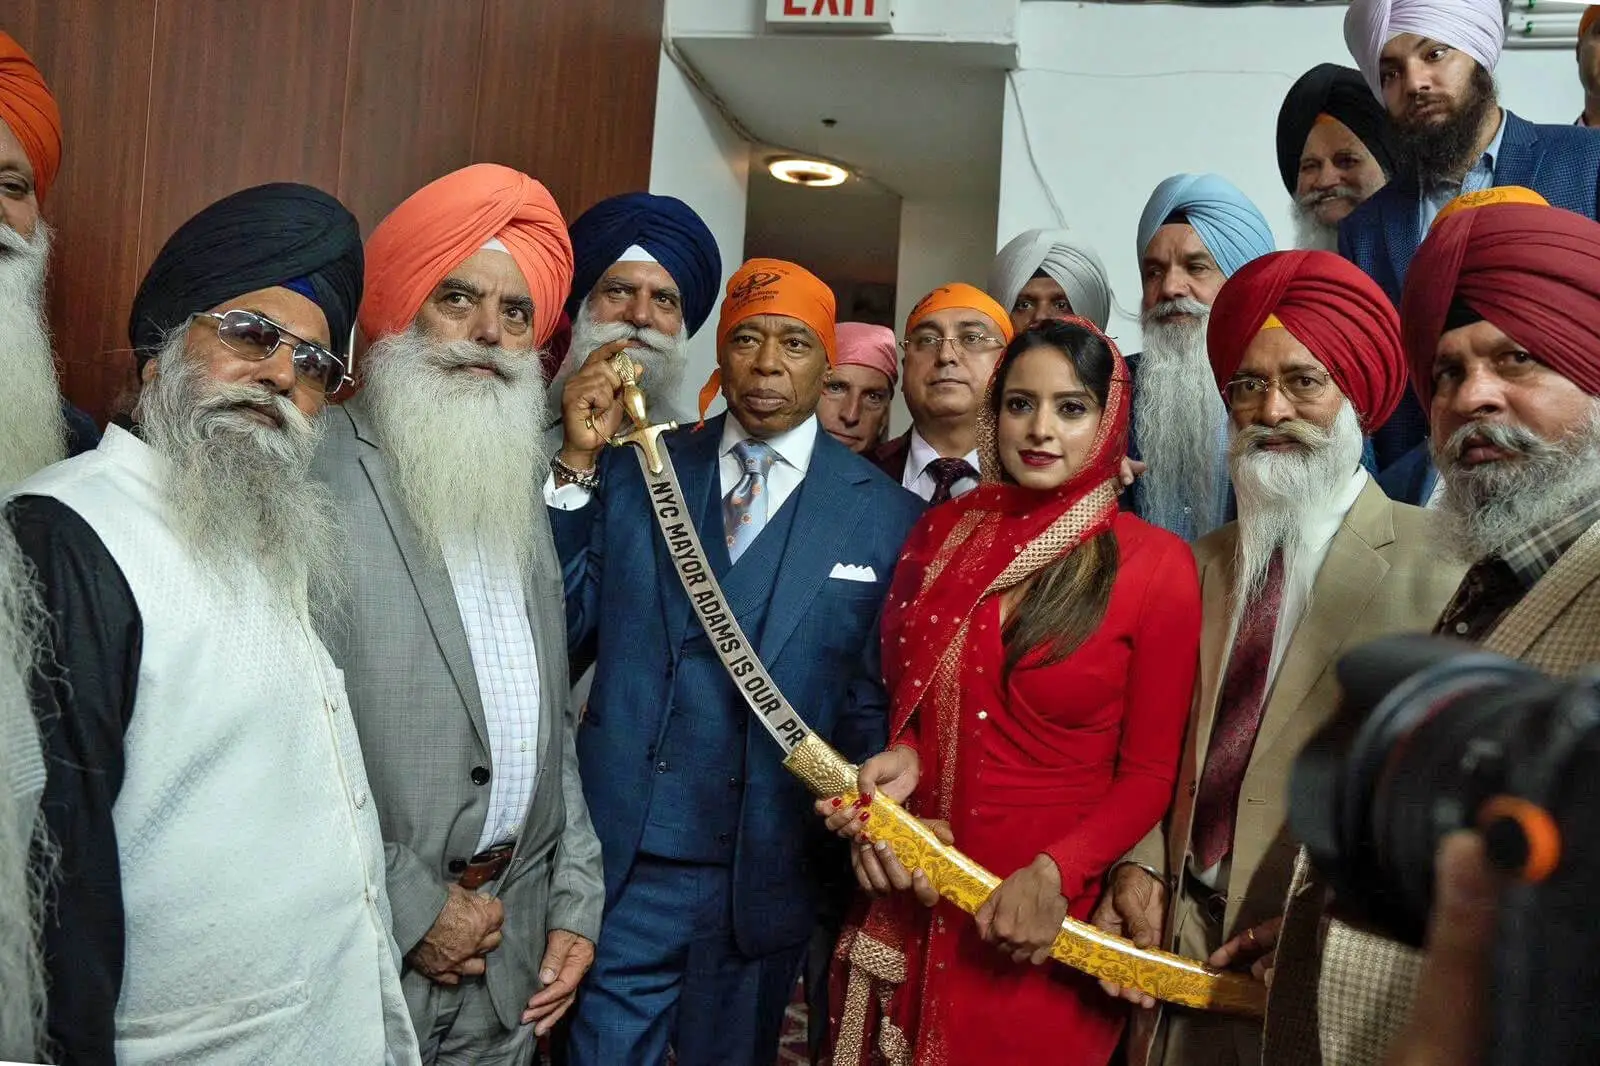 SikhiSambandh: Ties That Bind in the Sikh Community